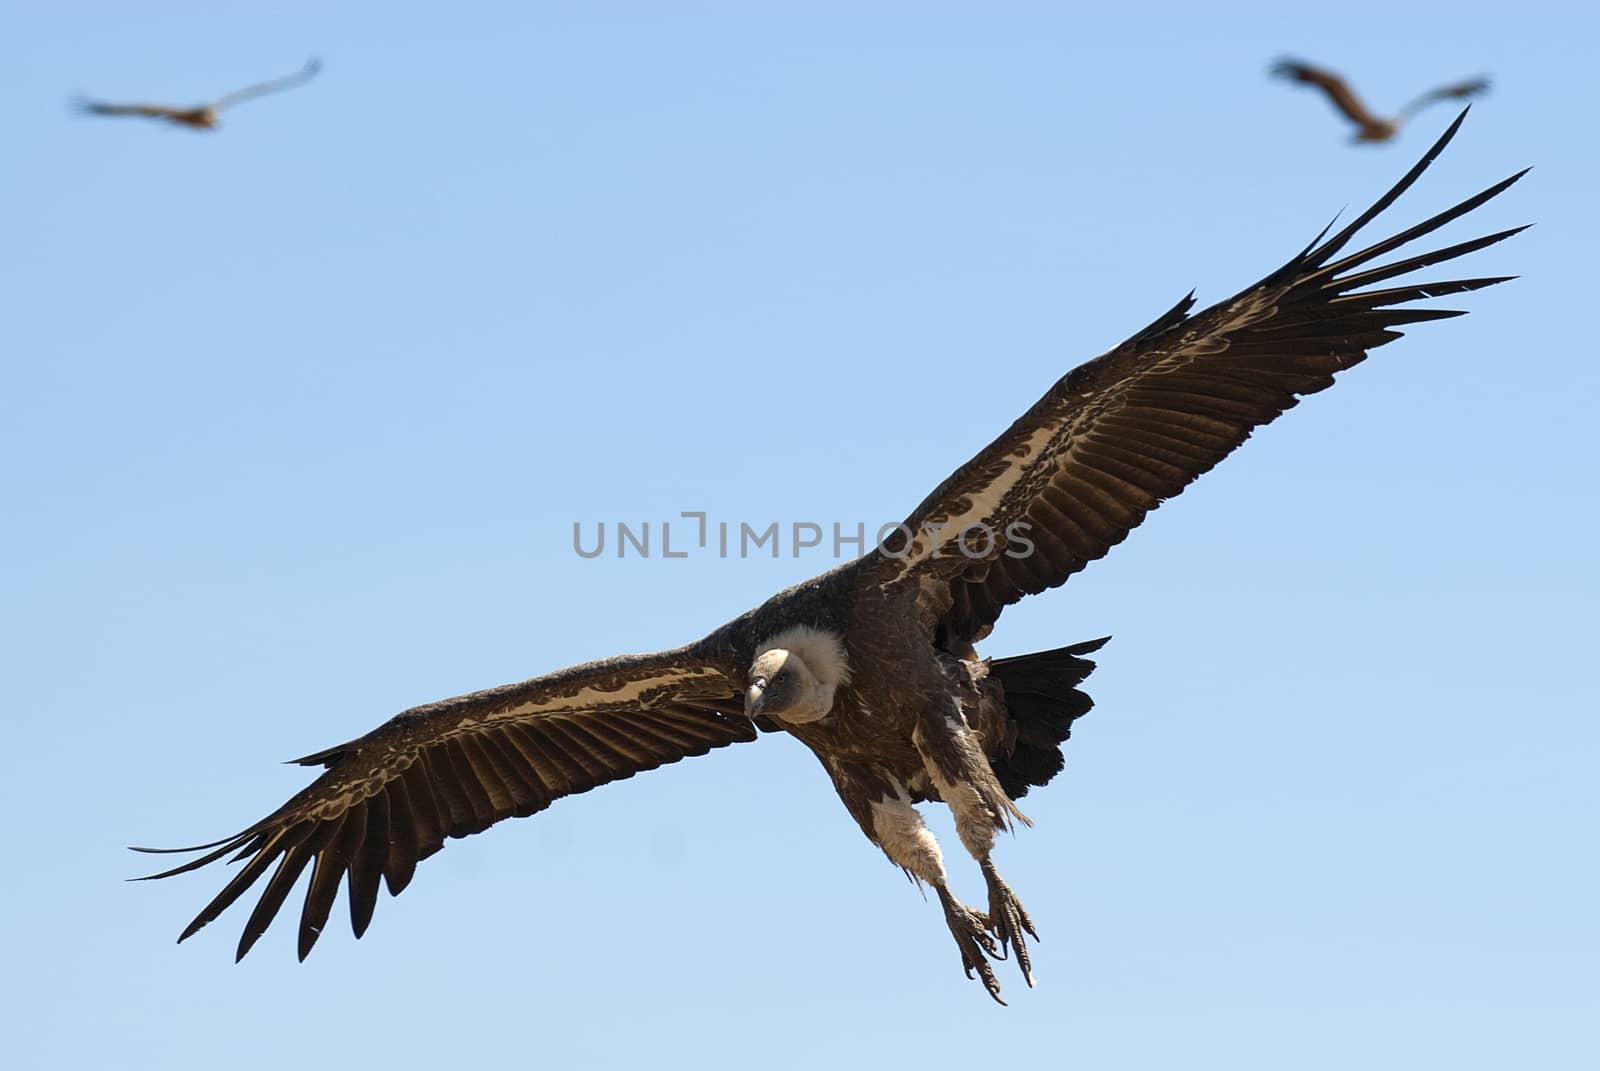 Griffon Vulture (Gyps fulvus) flying, silhouette of bird